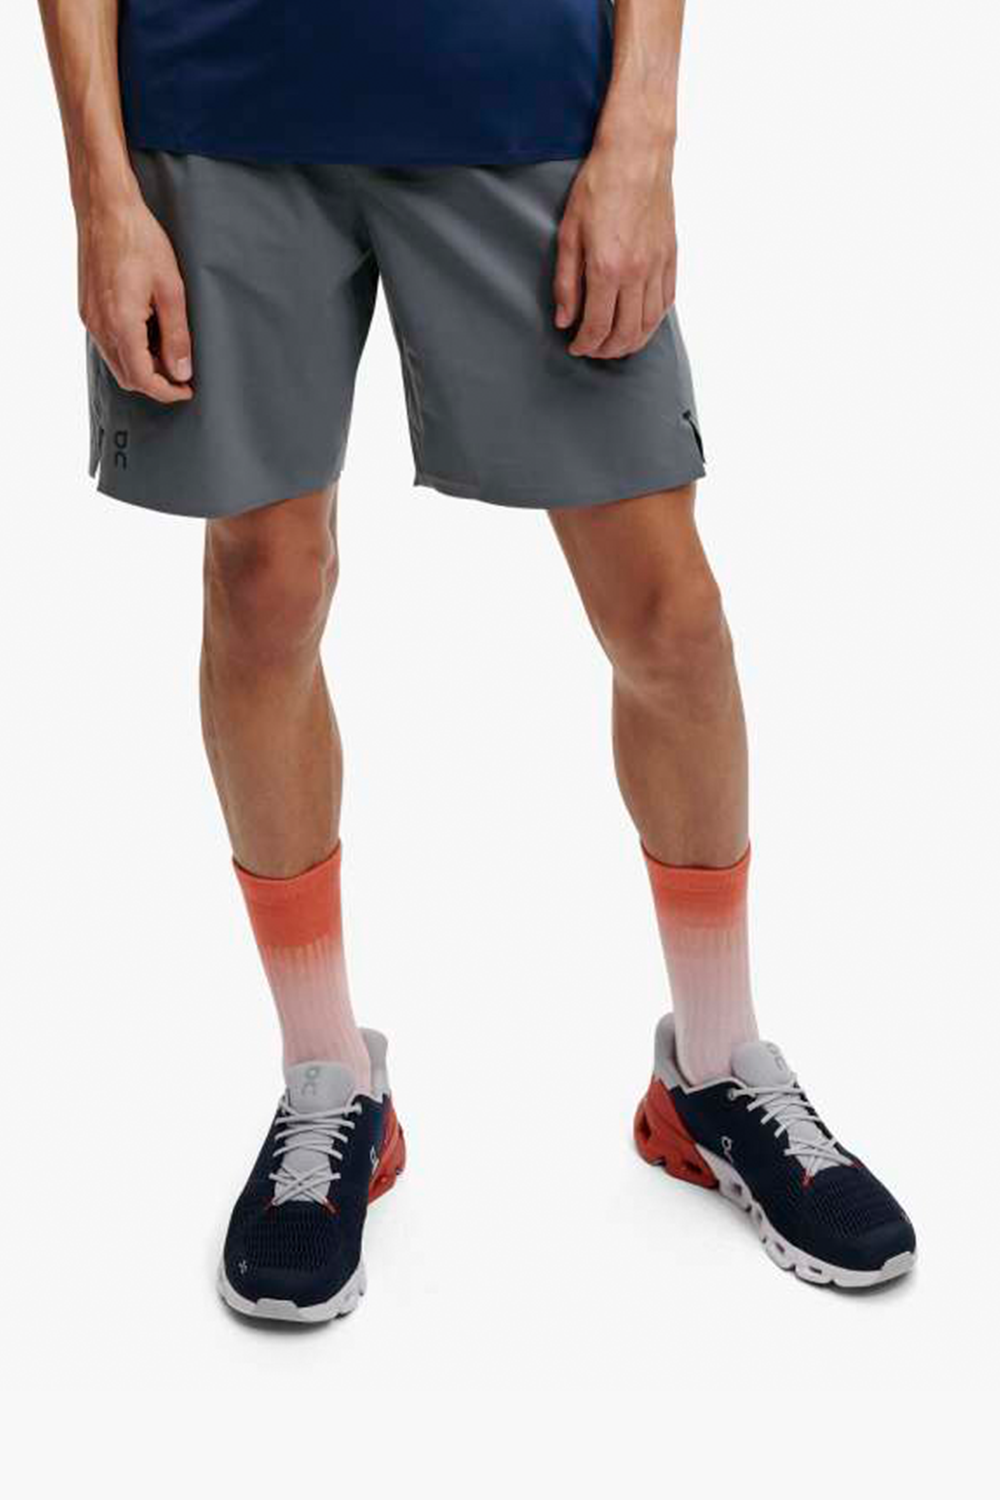 ON | Men's Hybrid Shorts in Rock